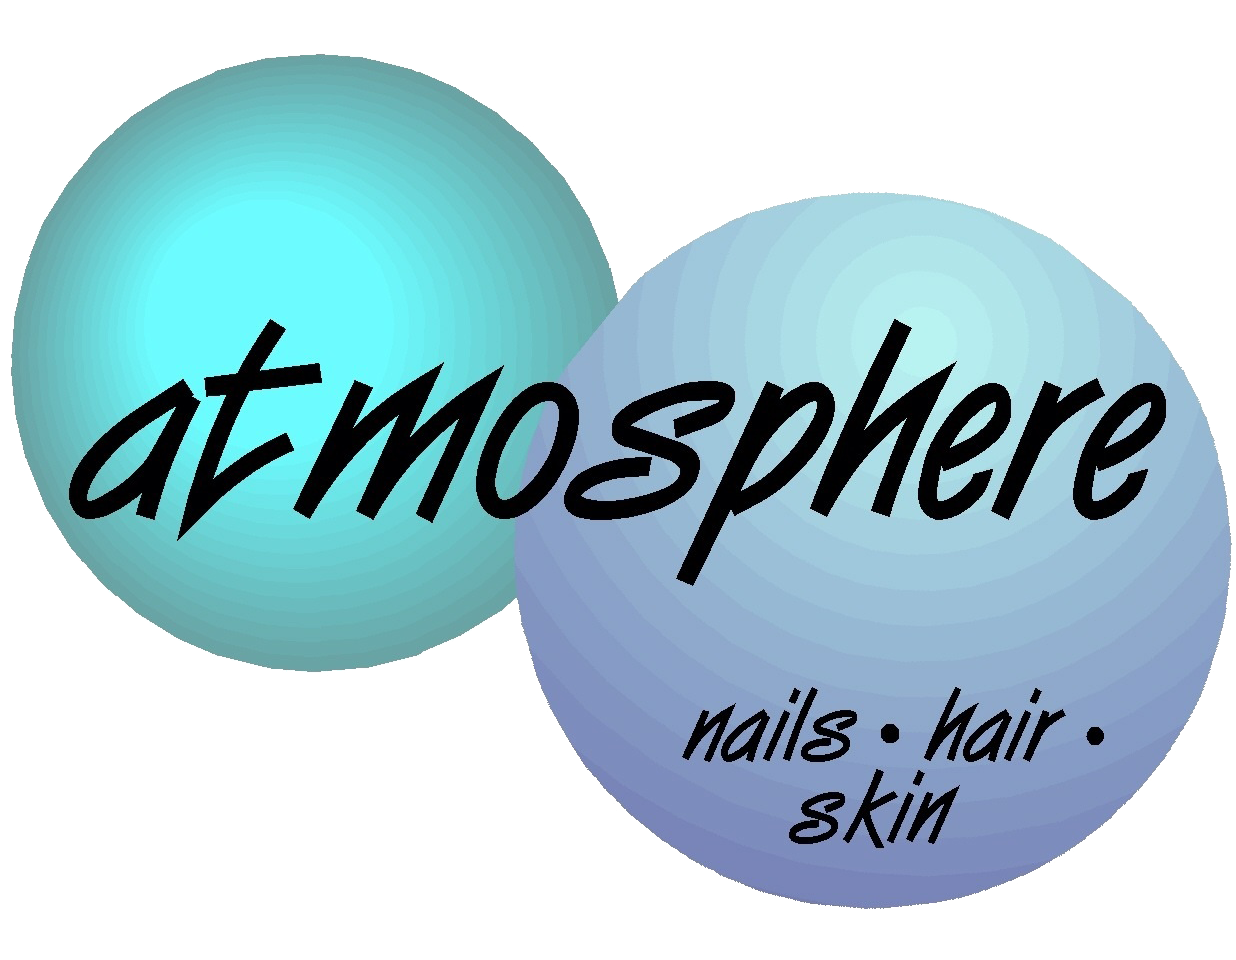 Atmosphere nails.hair.skin